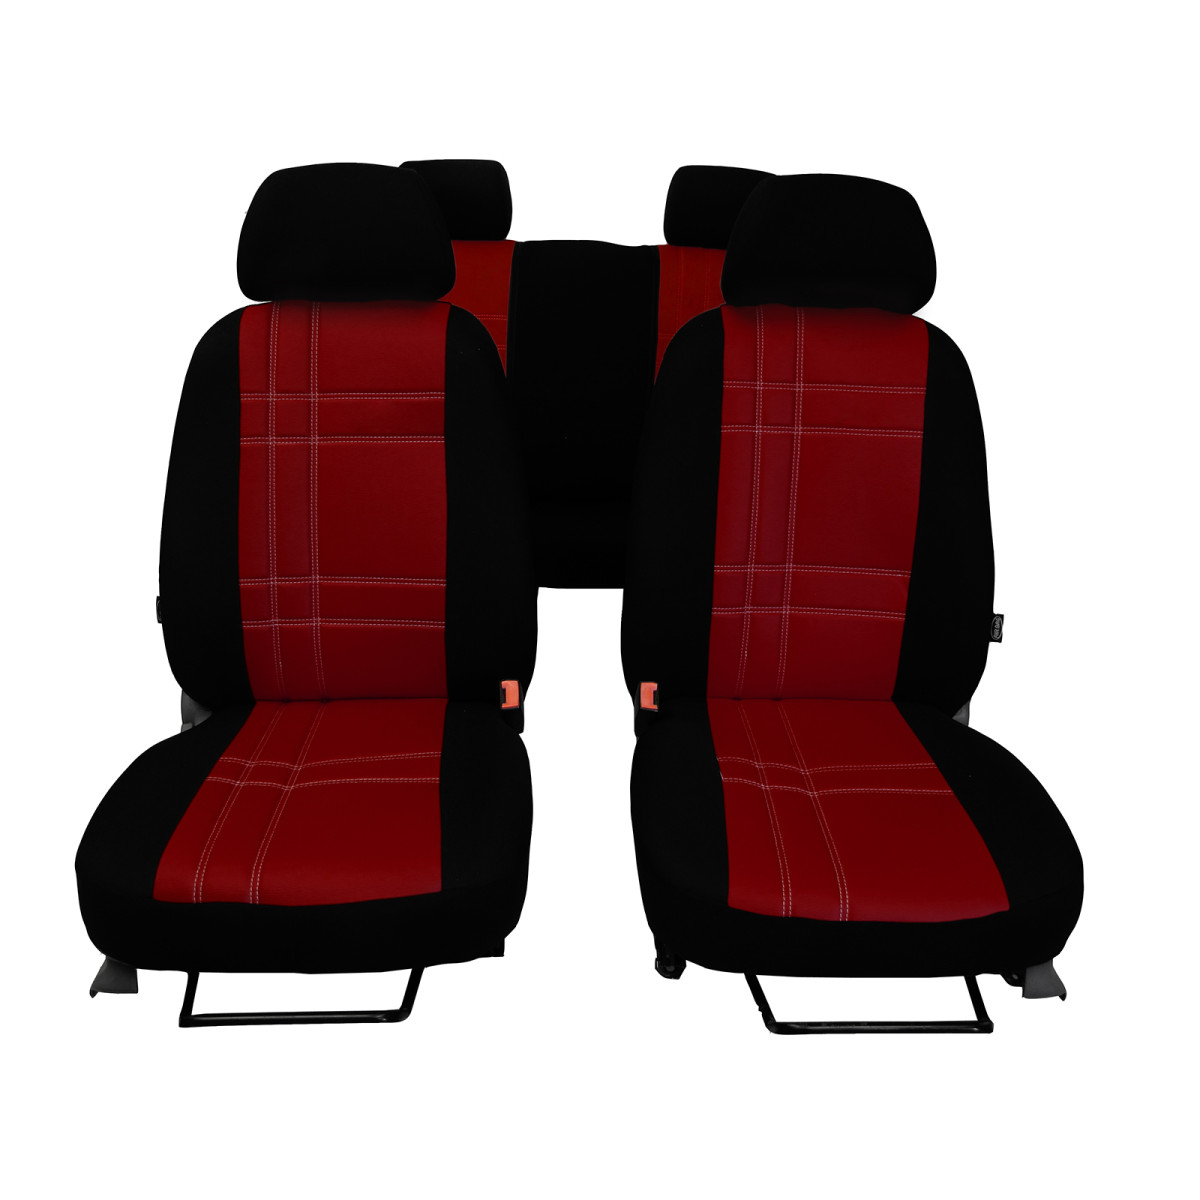 S-TYPE sitzbezüge (öko-leder) Volkswagen Golf VII Sportsvan